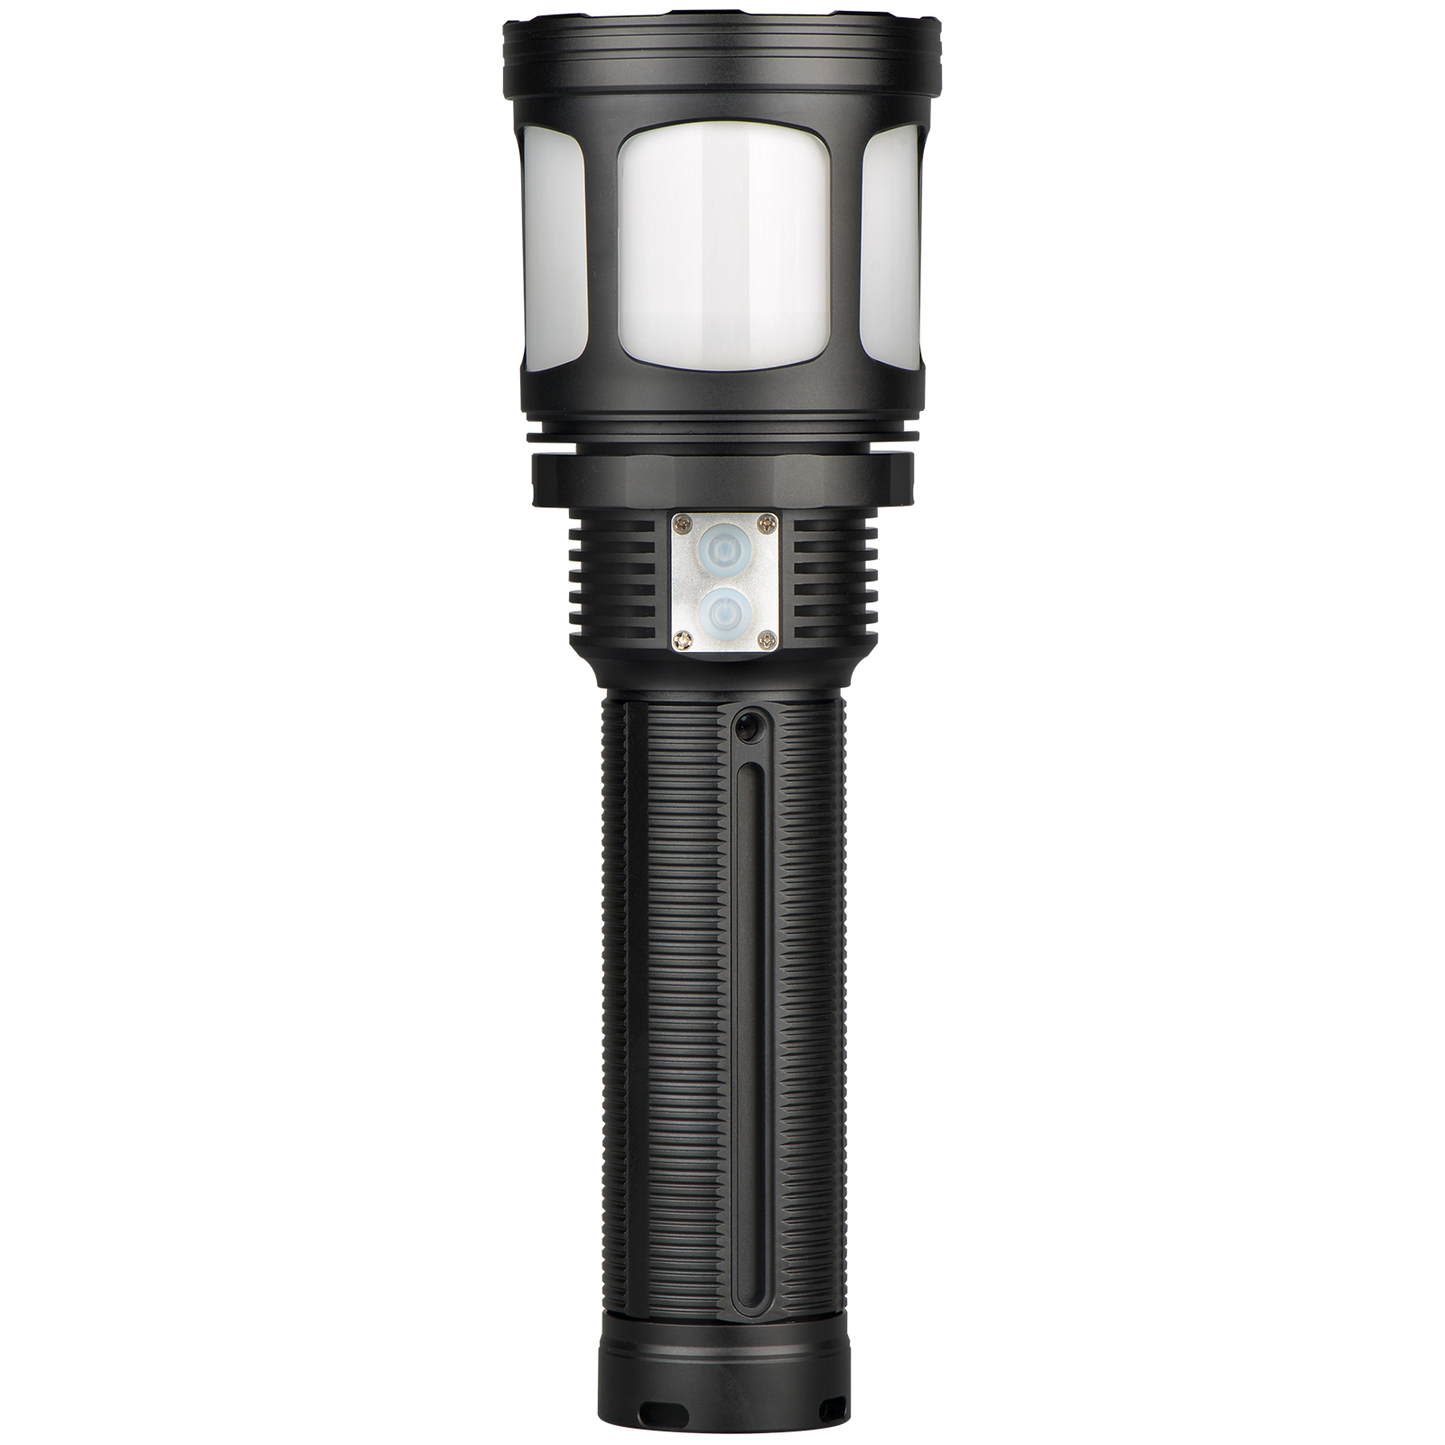 Haikelite HK95 23000 Lumens Powerful Searching Flashlight